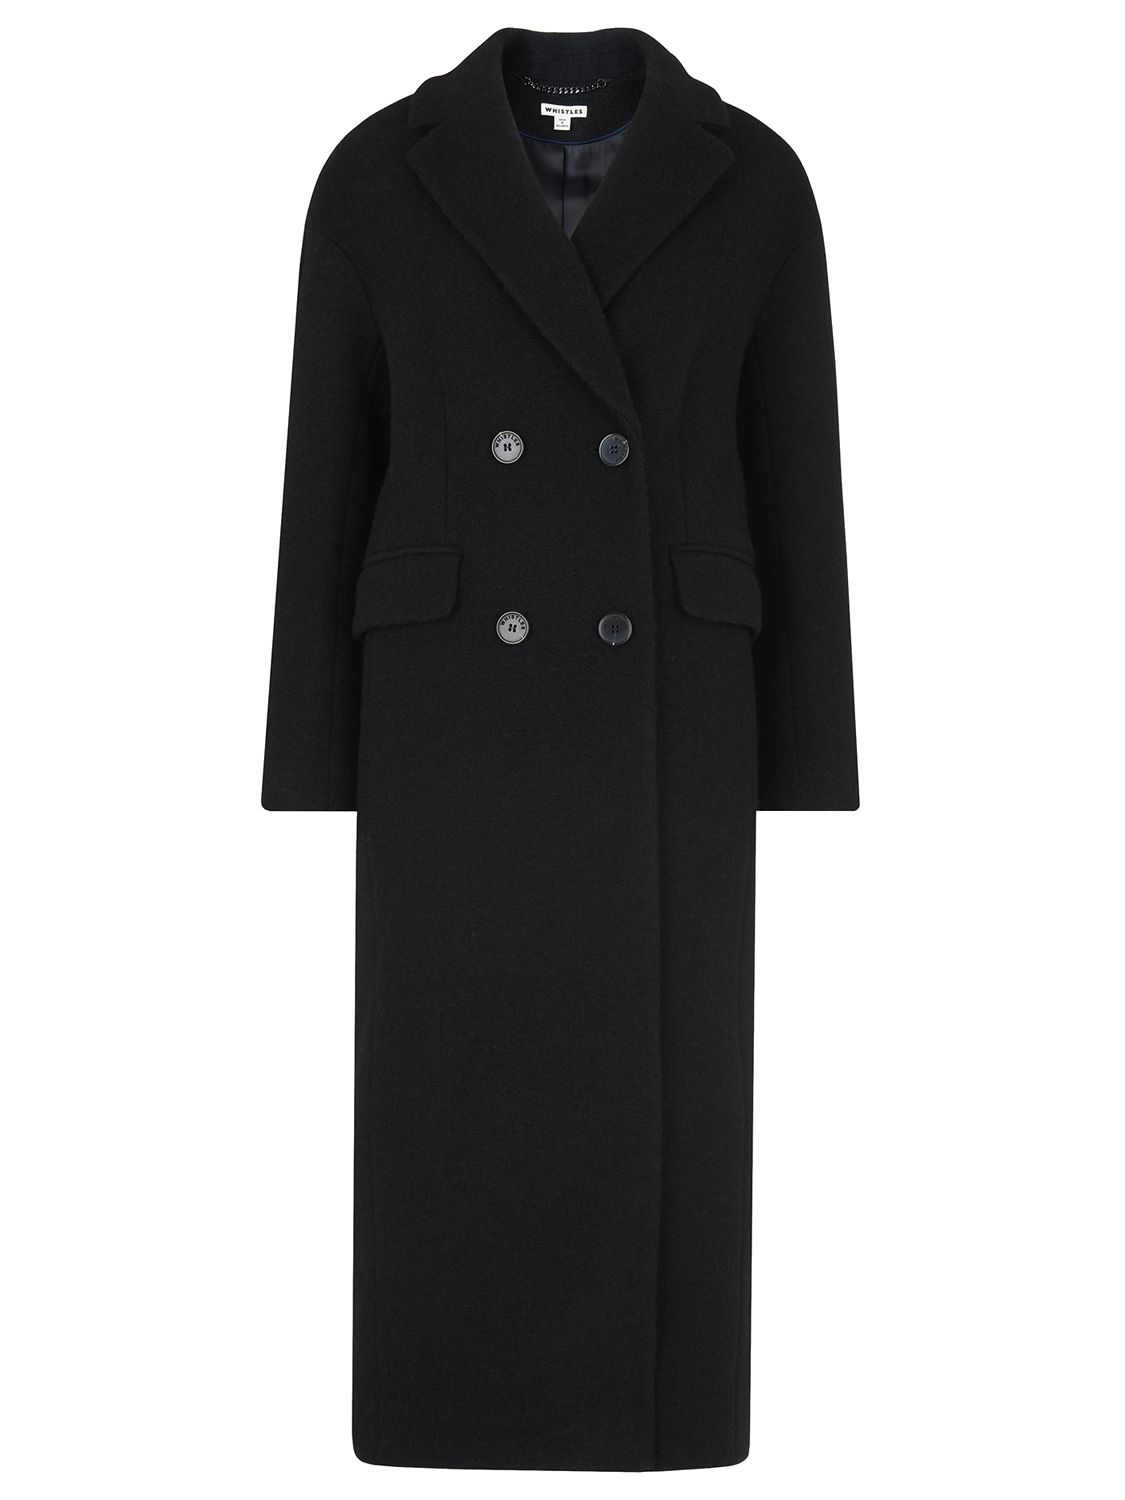 Whistles Textured Maxi Coat, Black at John Lewis & Partners